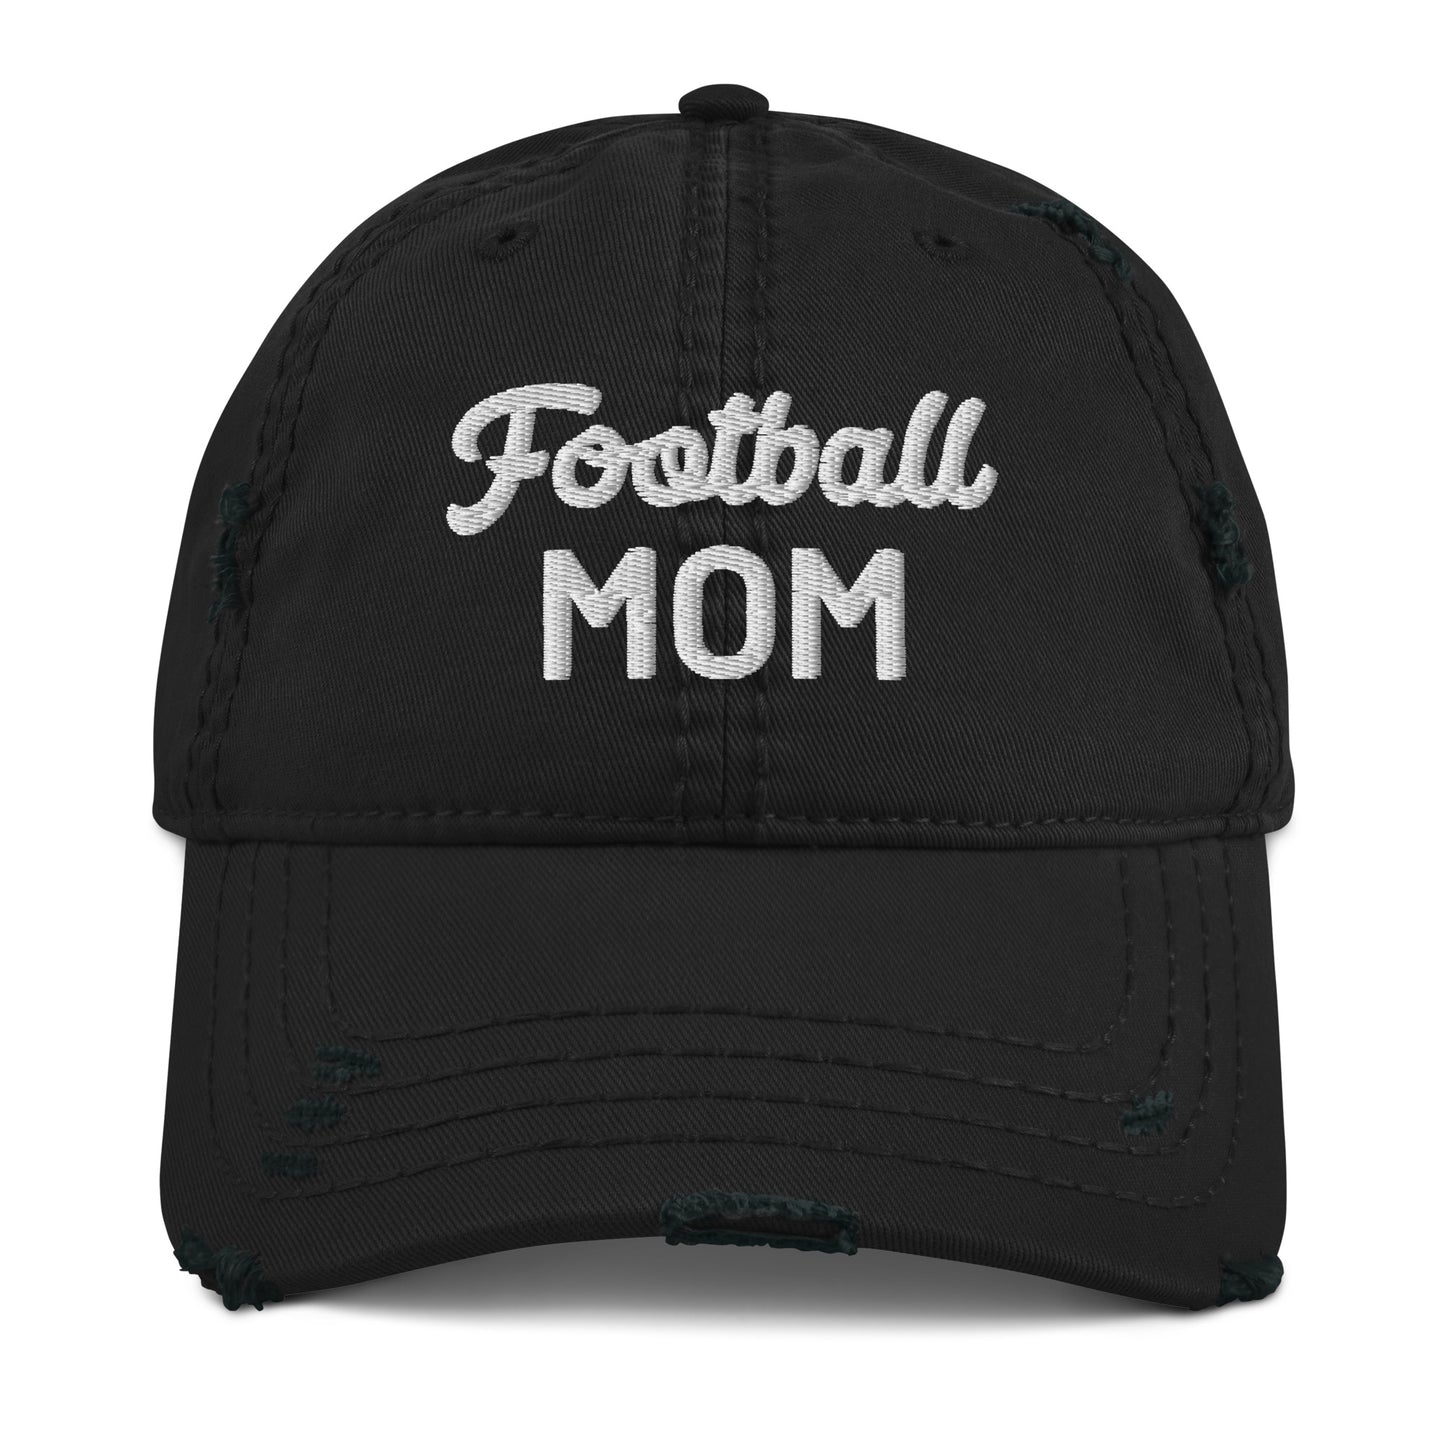 Football Mom Distressed Hat